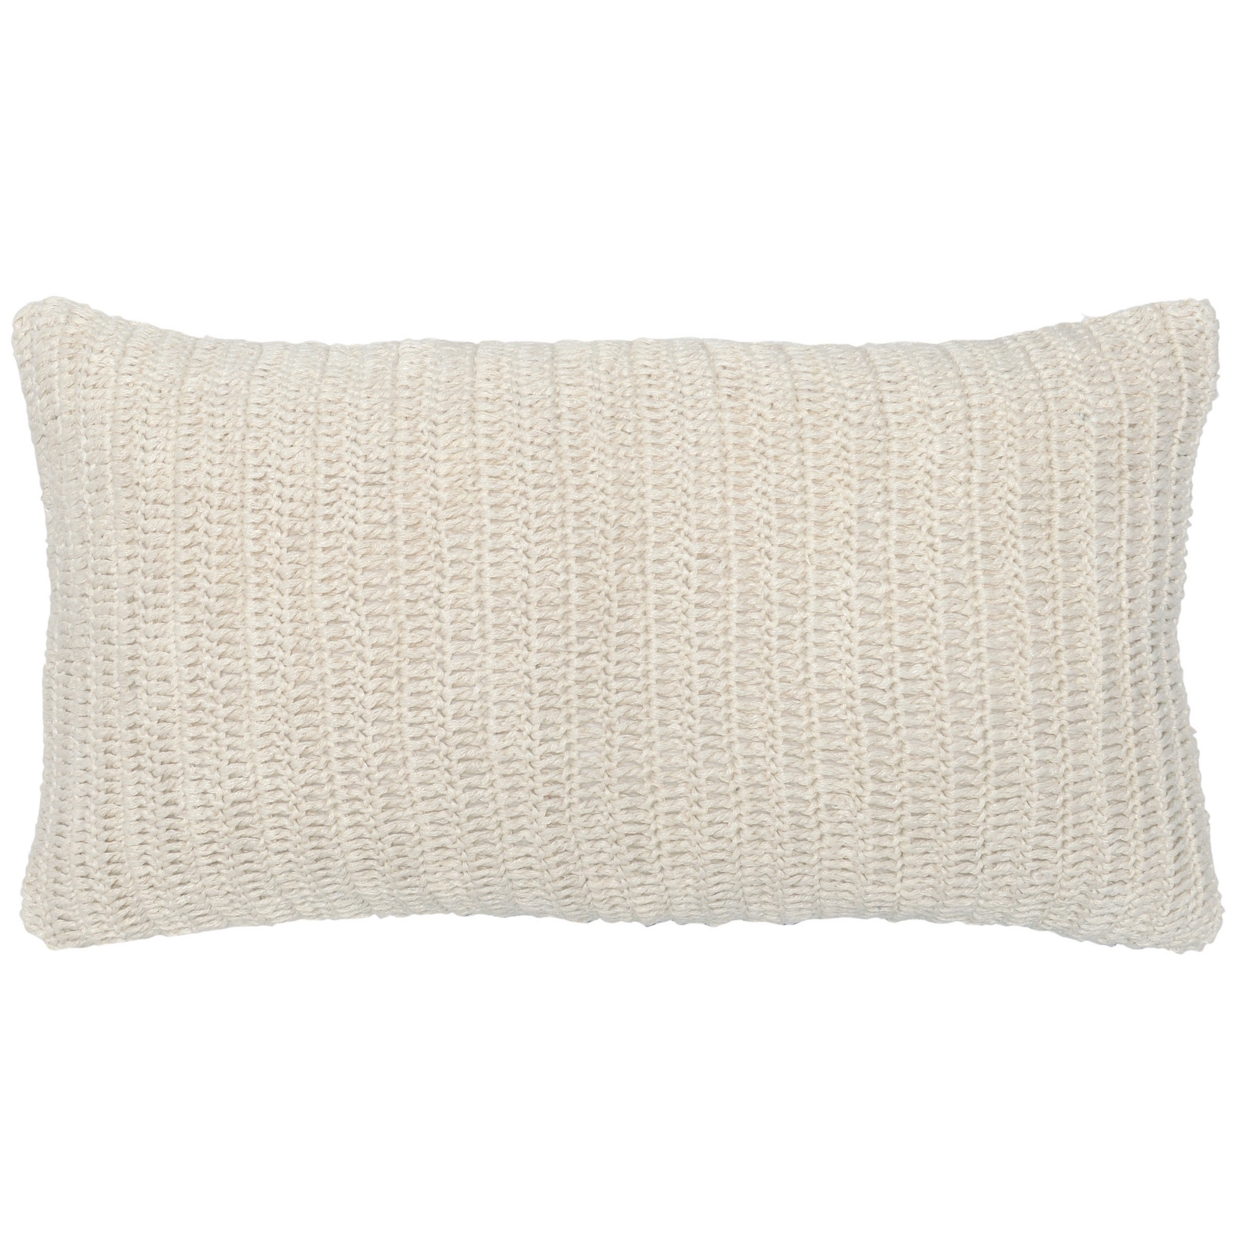 Rectangular Fabric Throw Pillow With Hand Knitted Details, White- Saltoro Sherpi